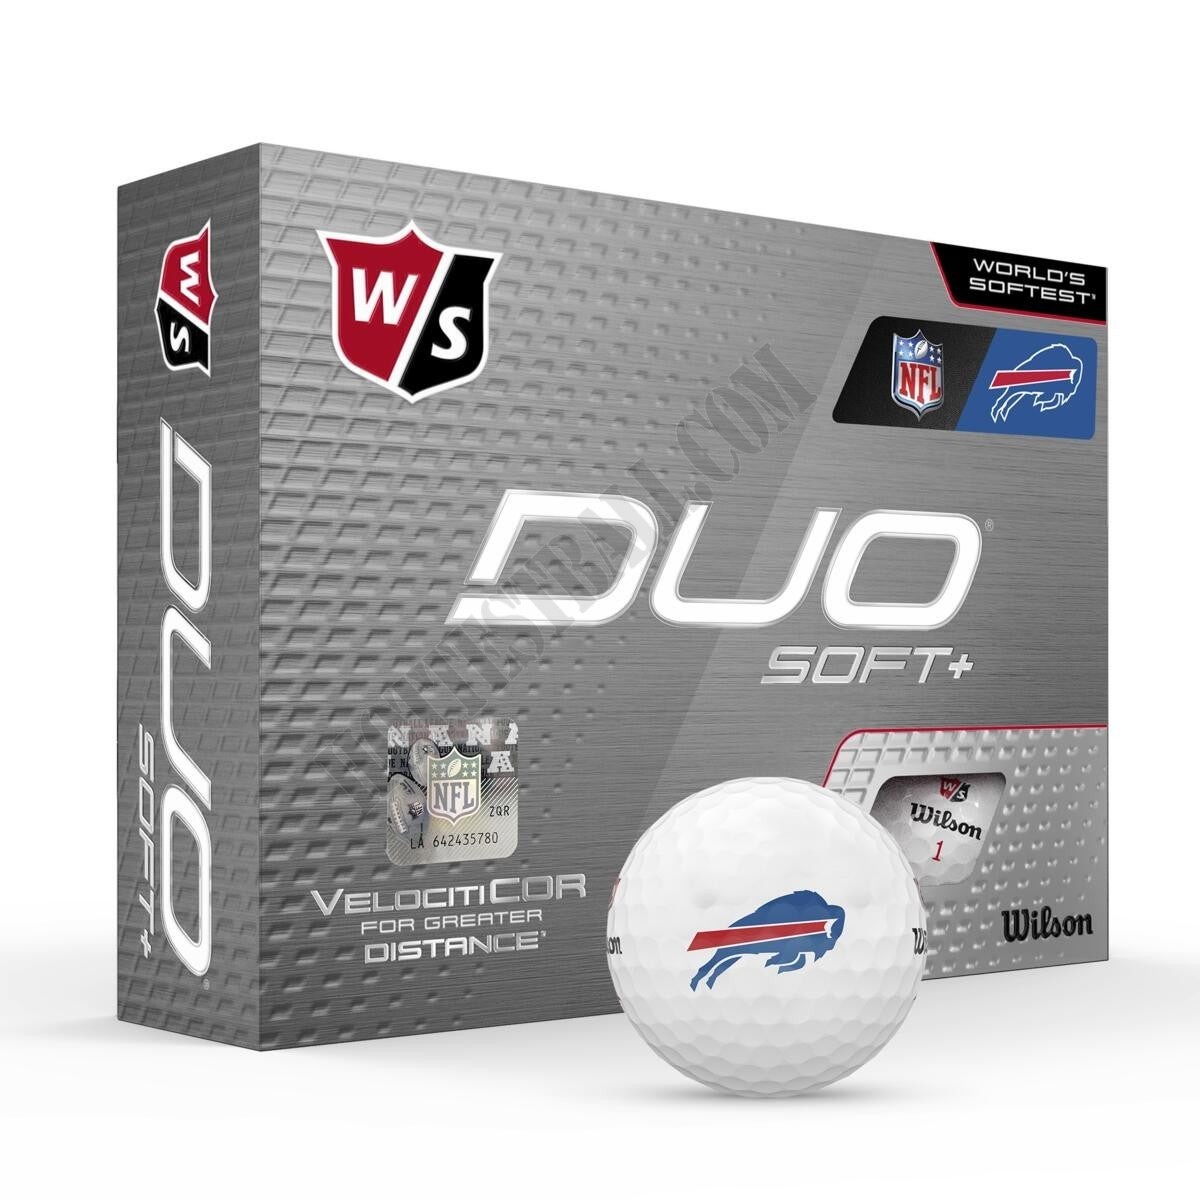 Duo Soft+ NFL Golf Balls - Buffalo Bills ● Wilson Promotions - Duo Soft+ NFL Golf Balls - Buffalo Bills ● Wilson Promotions